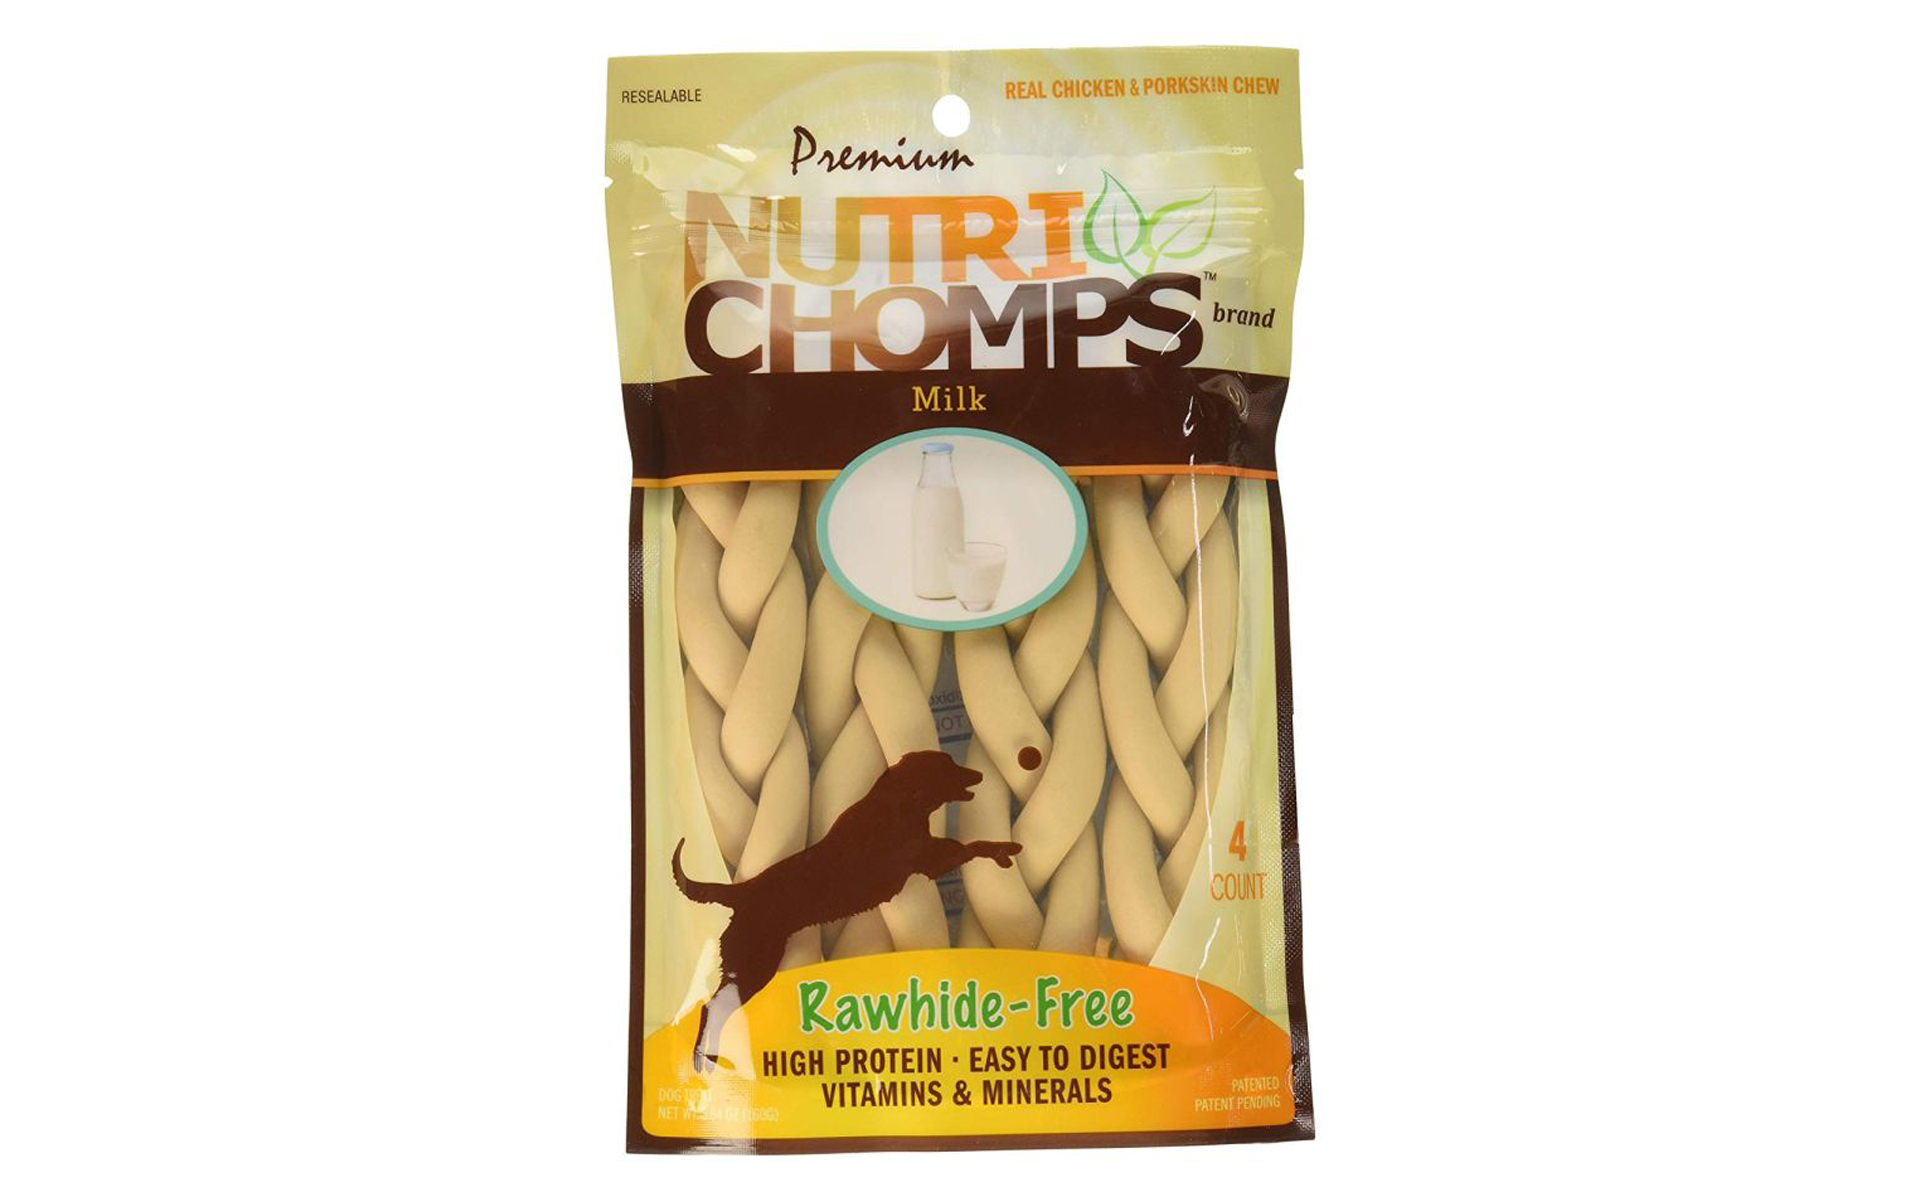 Premium Nutri Chomps Milk Flavor Braid Dog Chews - Small